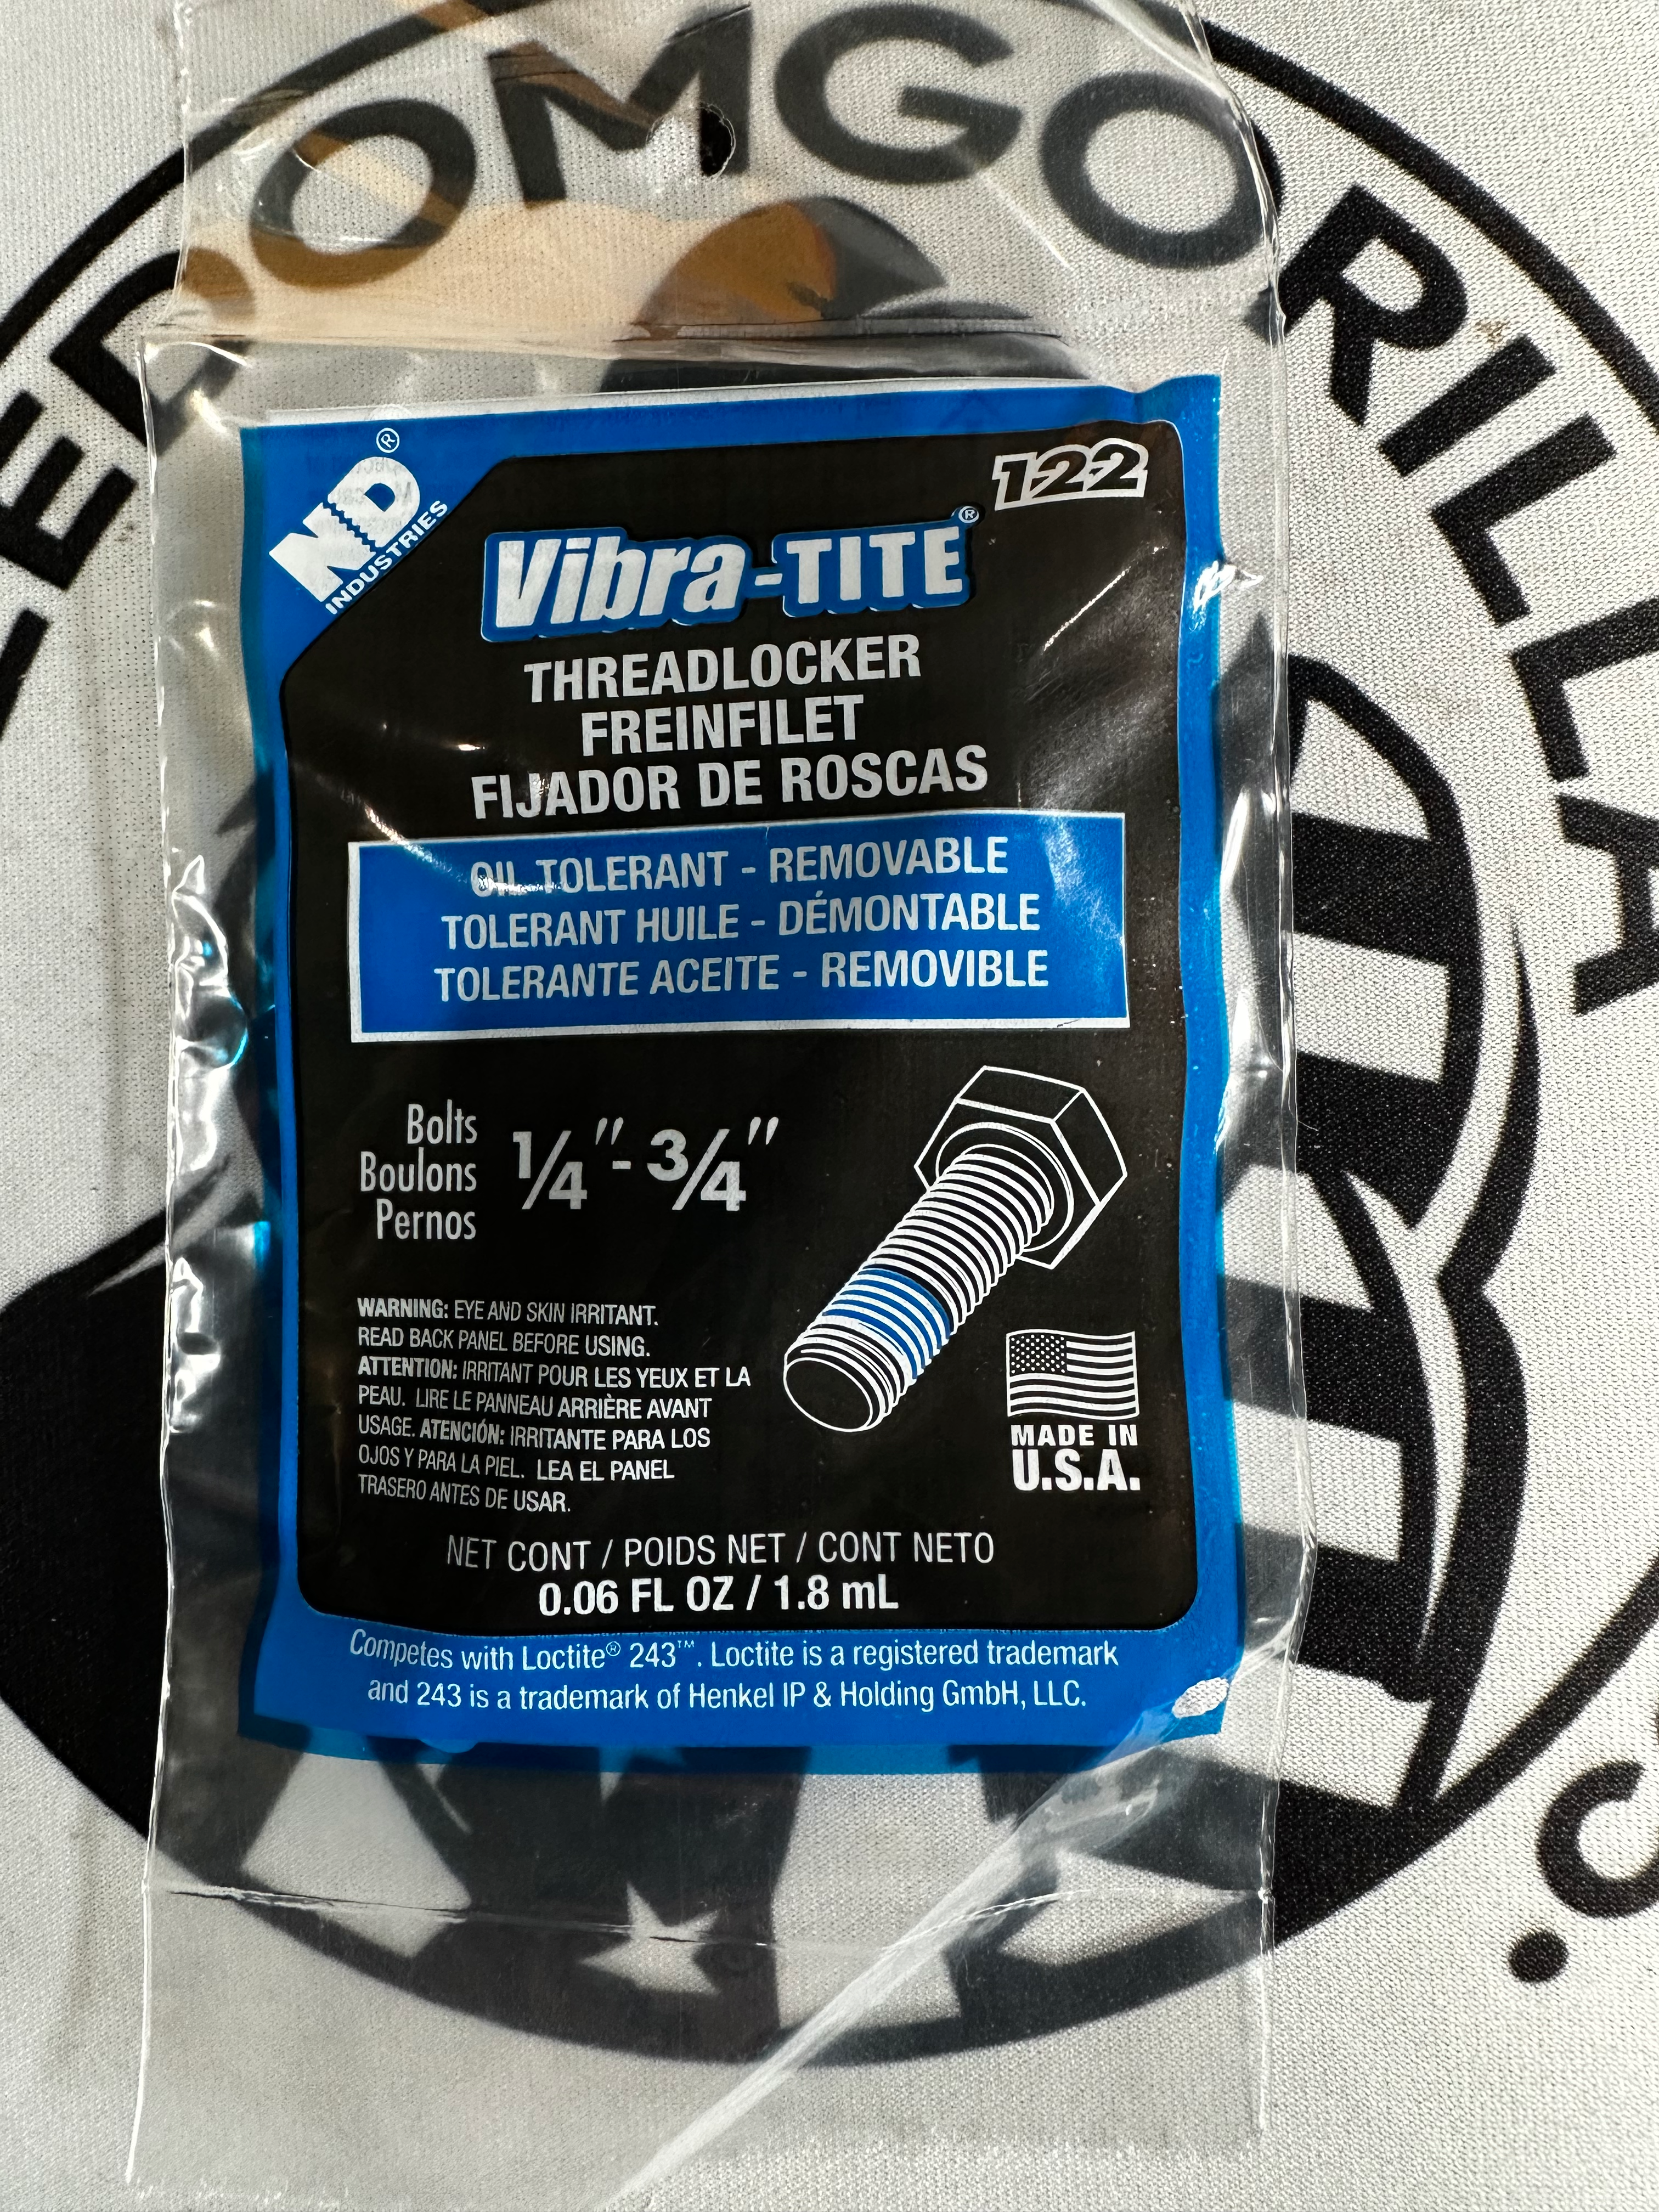 Vibra-Tite Blue Threadlocker 1.8ml Tube, 122 Oil Tolerant